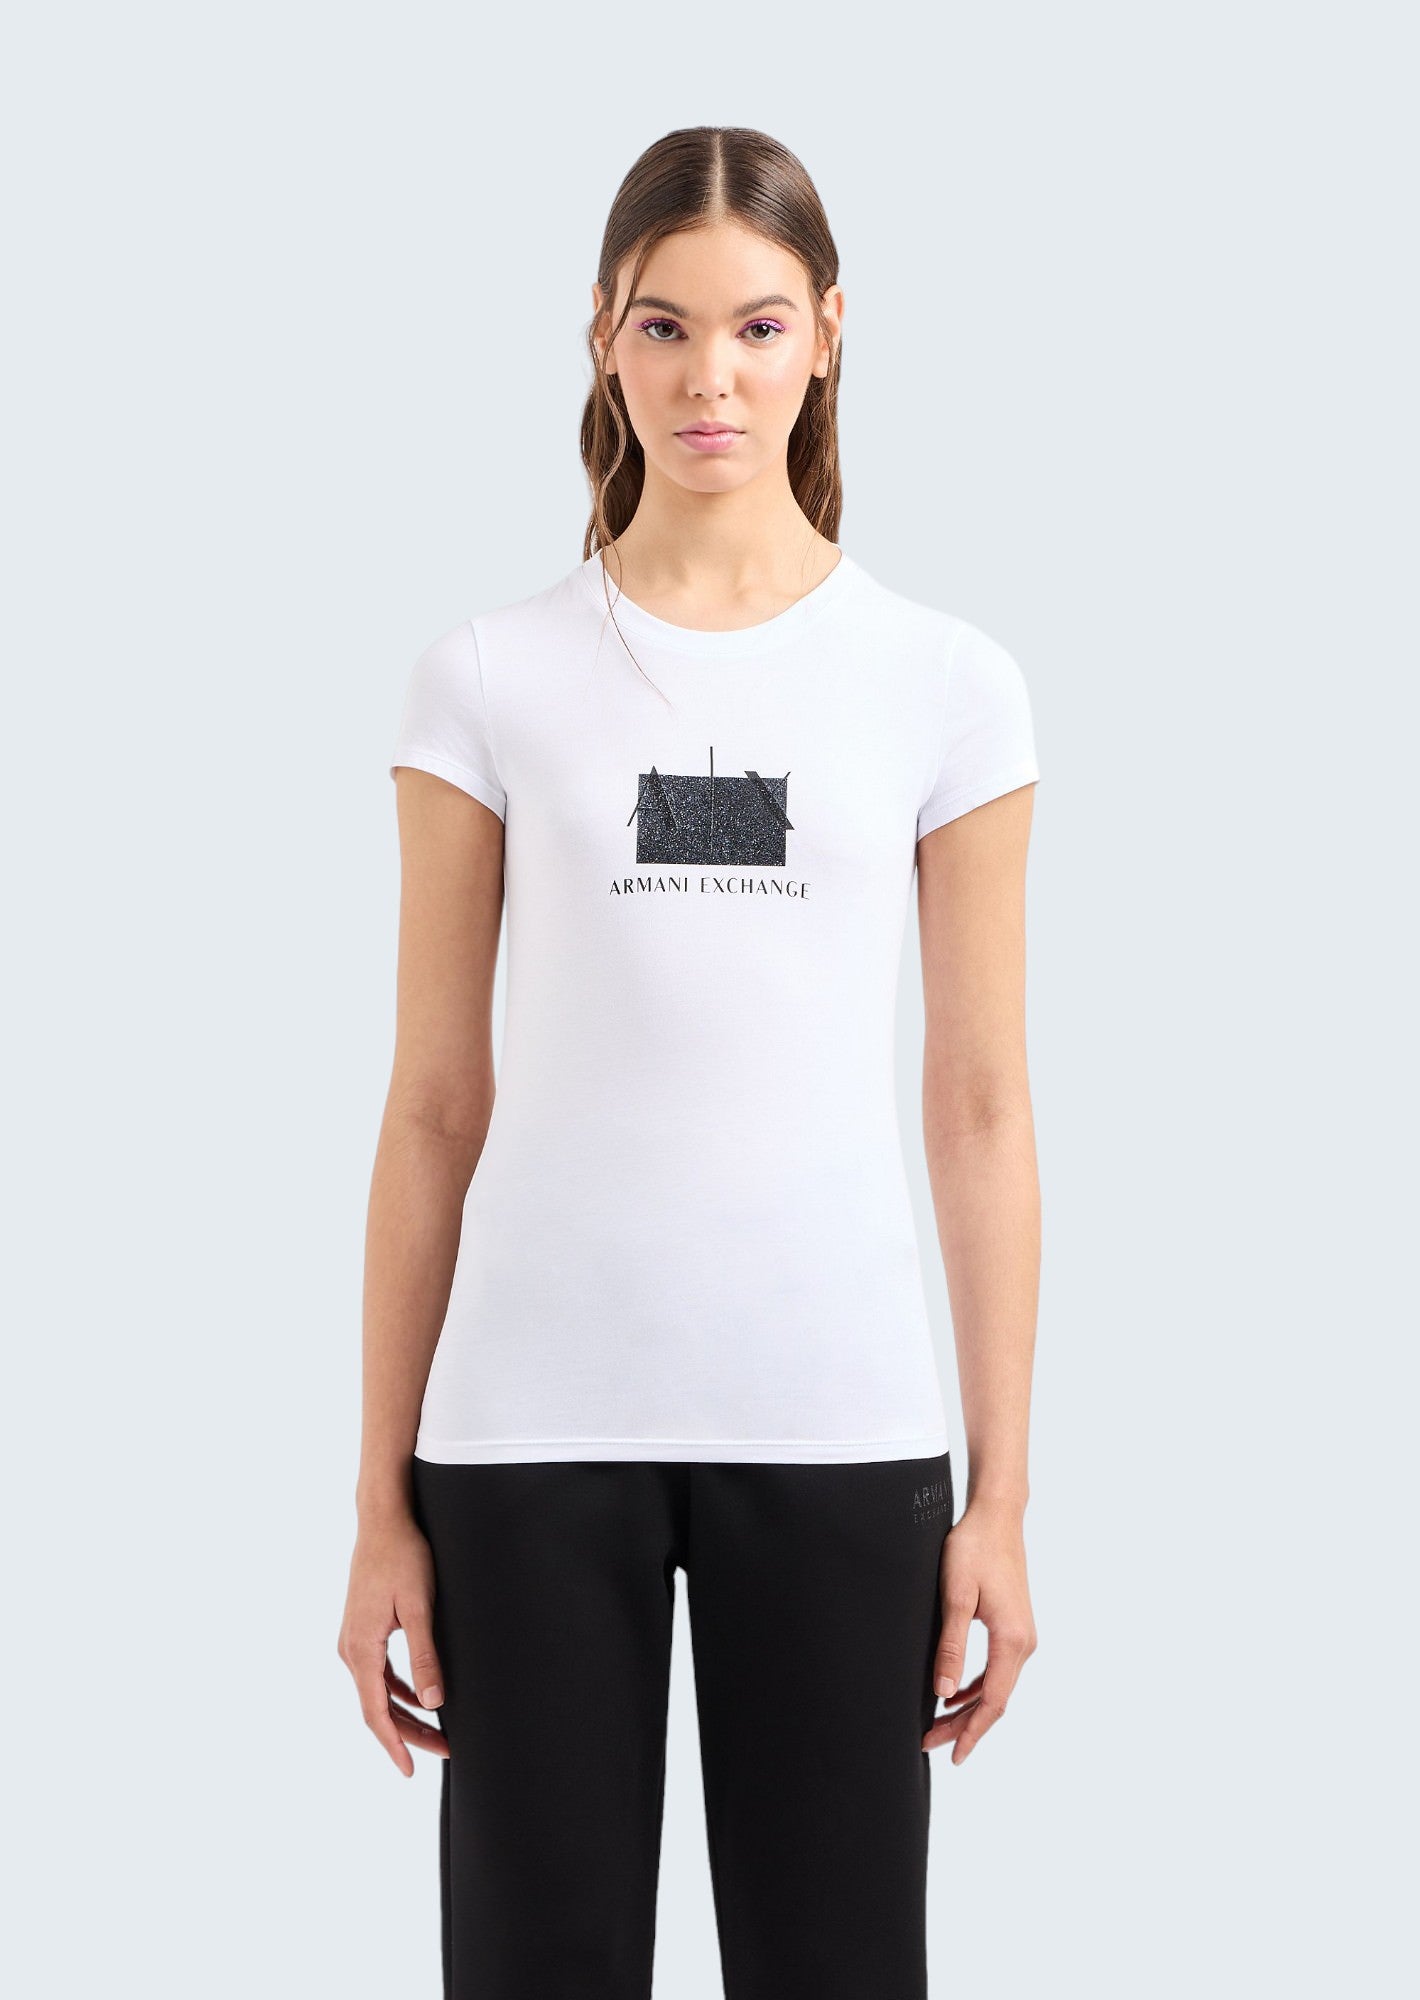 3dyt51 Optic White T-Shirt